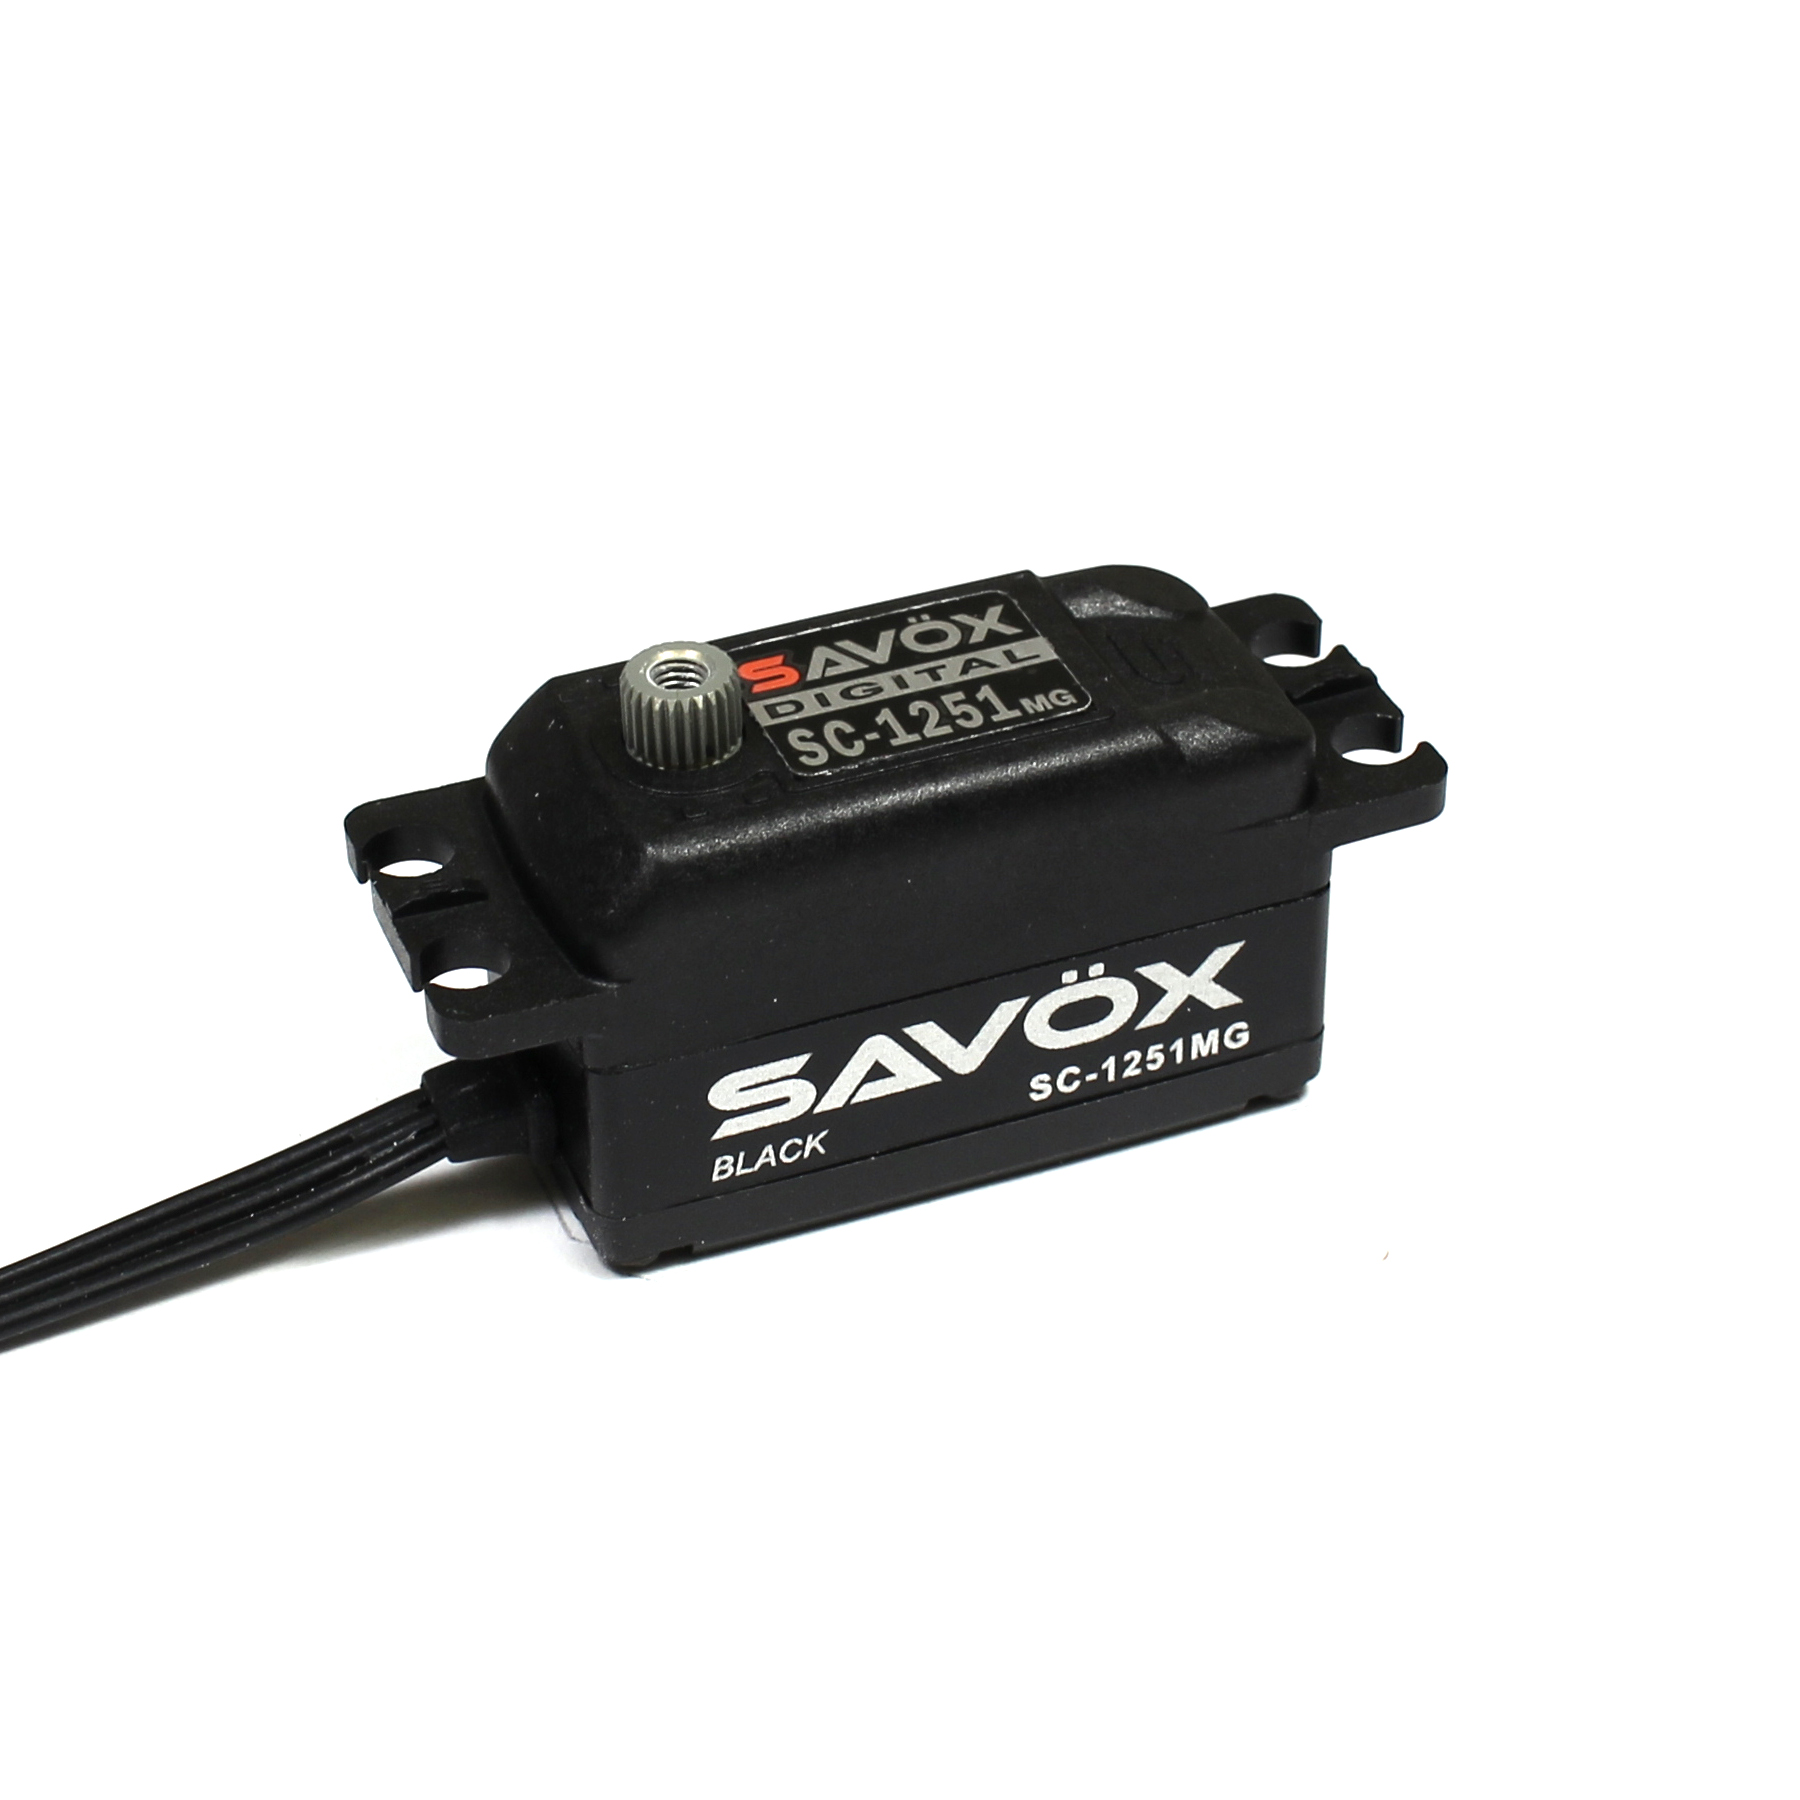 Savox Black Edition Low Profile Digital Servo w/ Soft Start